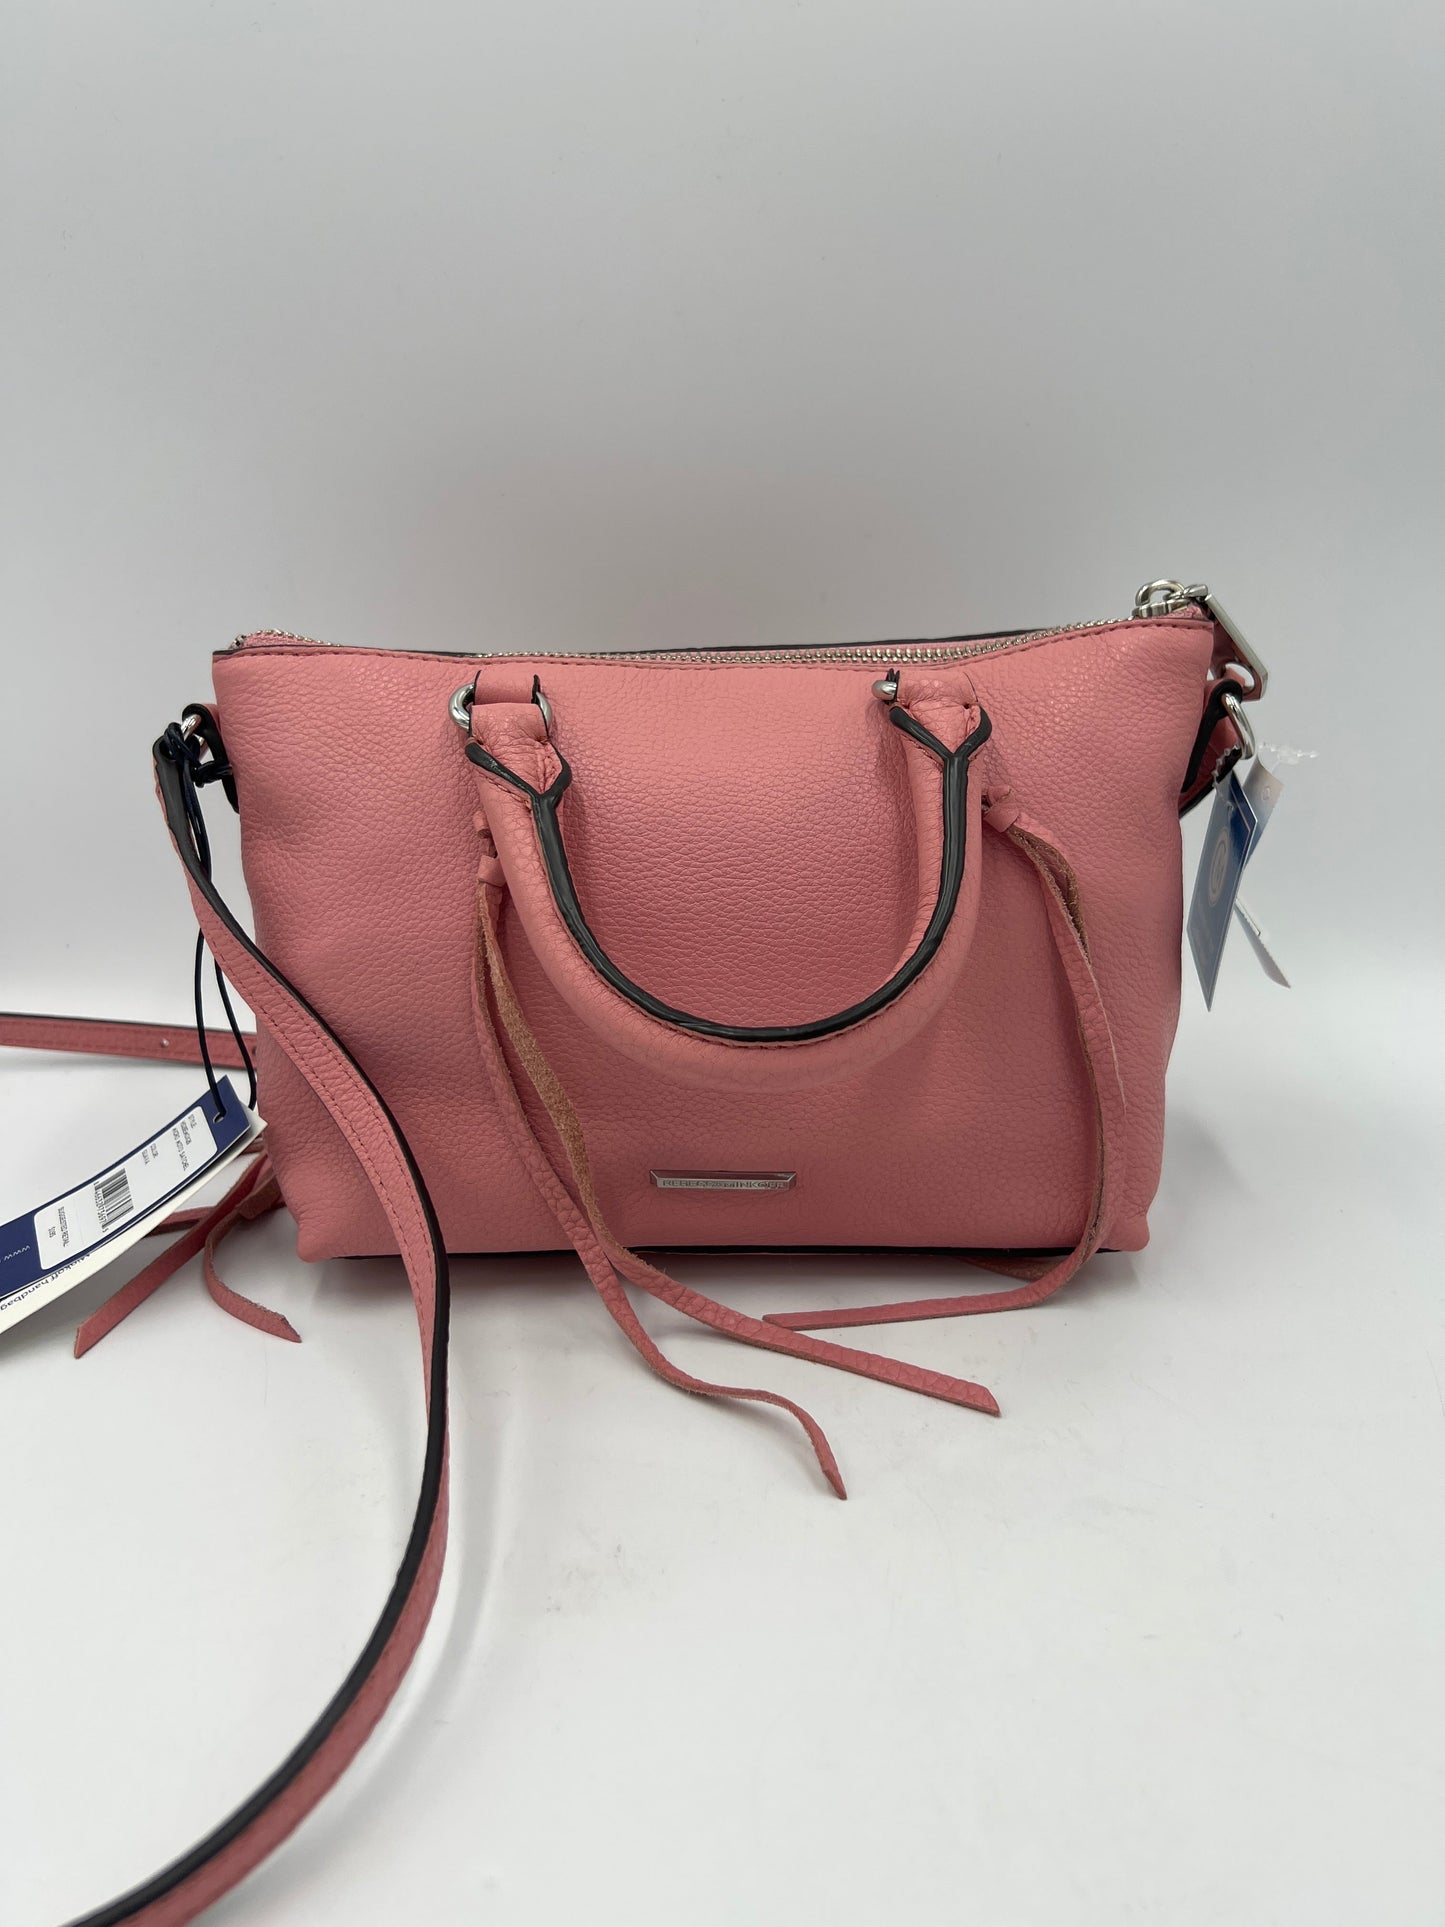 New! Handbag with Crossbody By Rebecca Minkoff